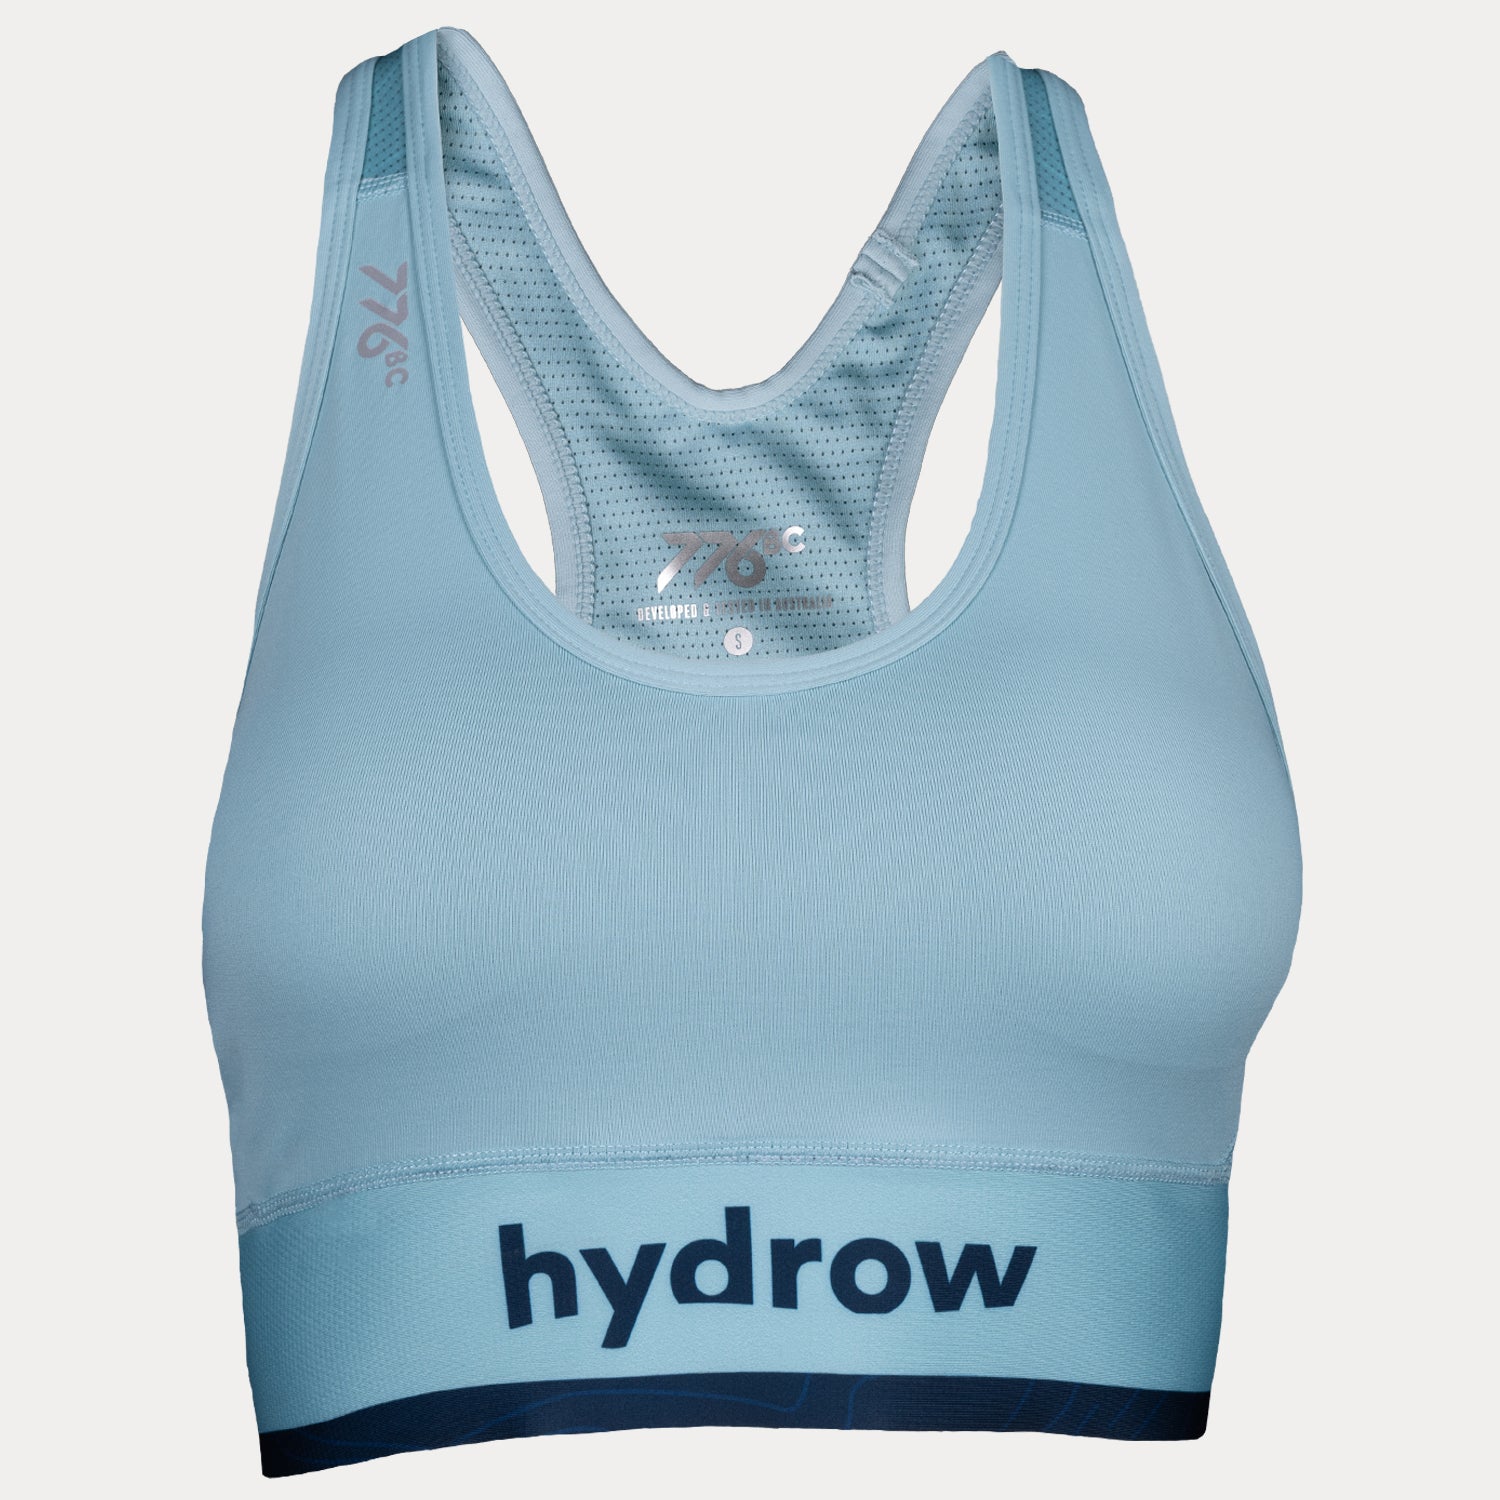 light blue women's pro sports crop with dark blue hydrow logo on upper stomach and dark blue strip at bottom